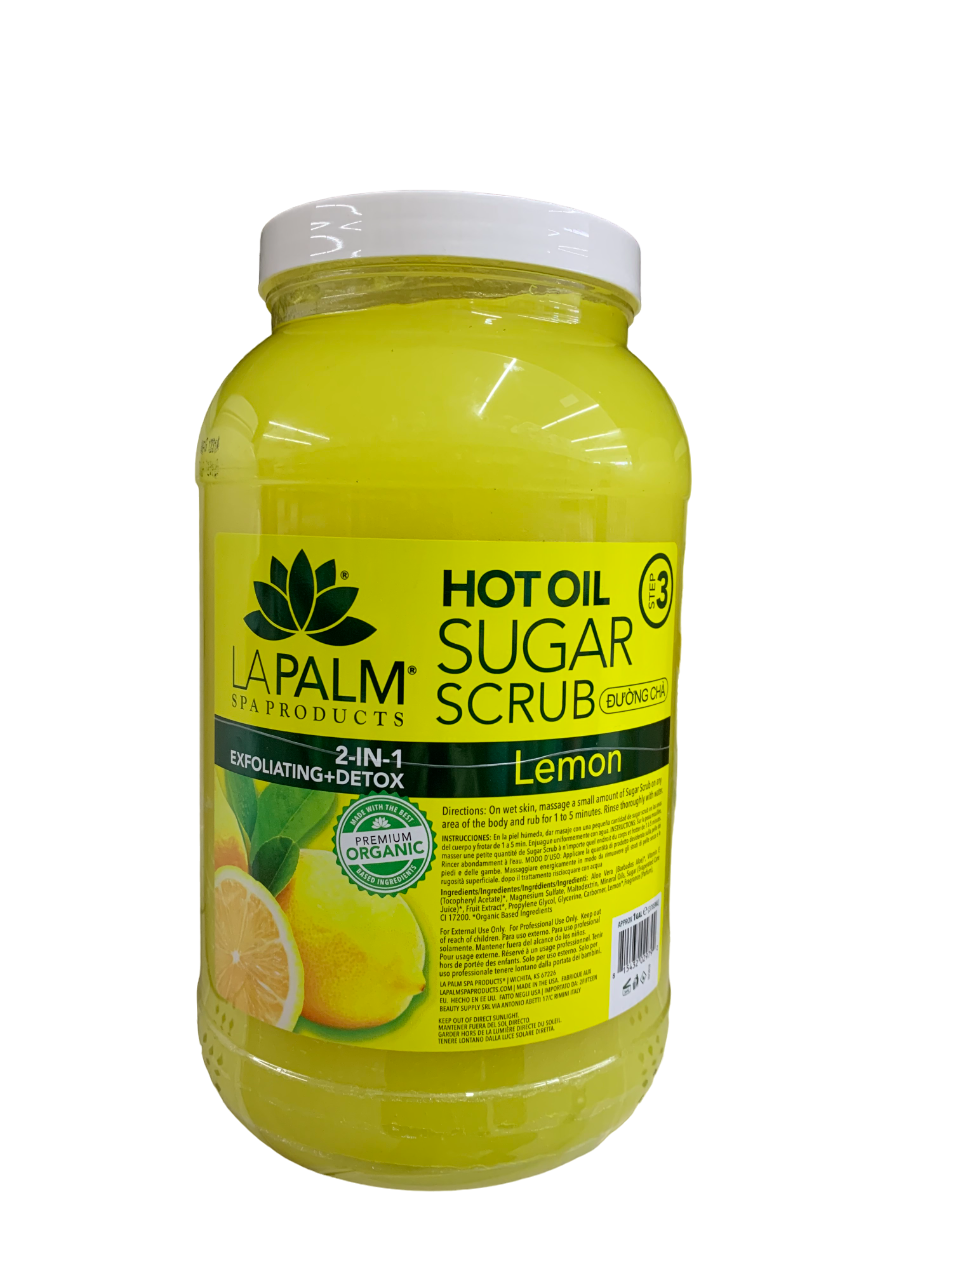 Lapalm Hot Oil Sugar Scrub Lemon